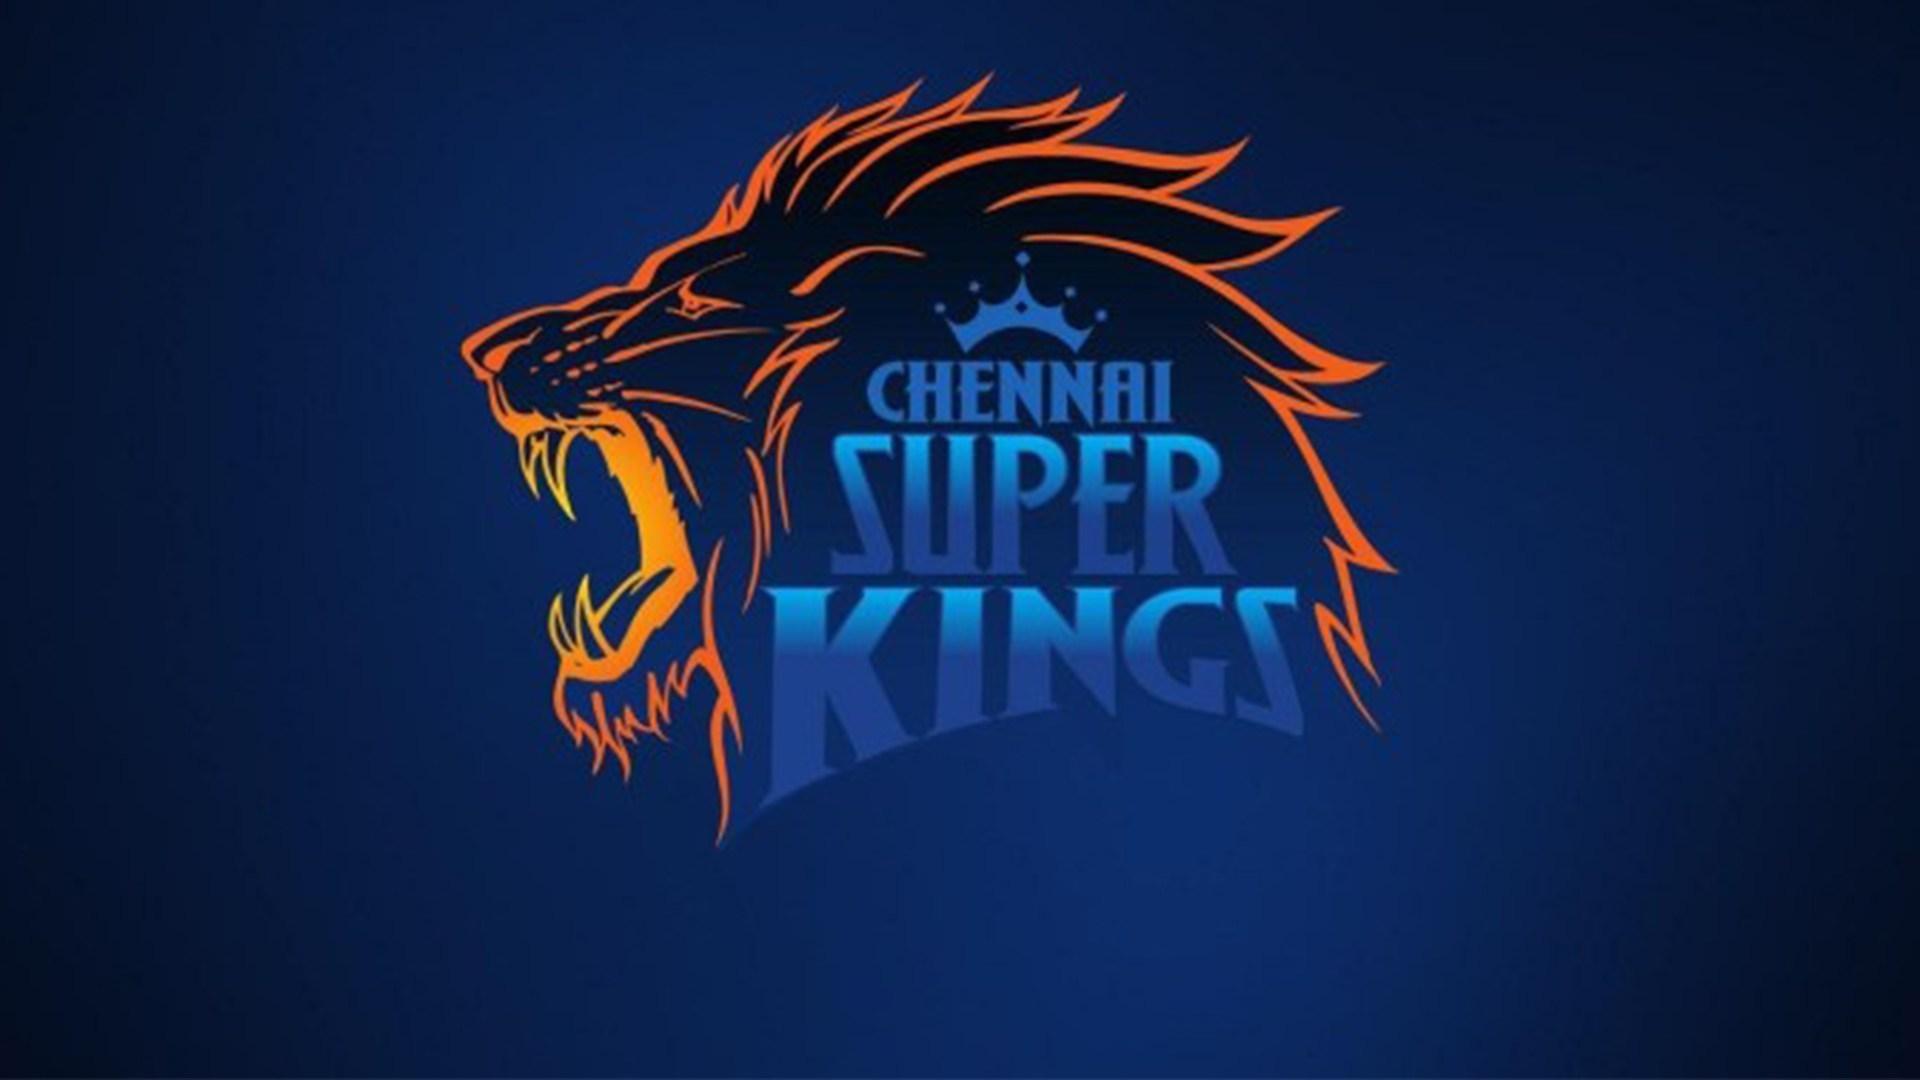 CSK Logo HD Wallpaper 2019. Chennai Super Kings